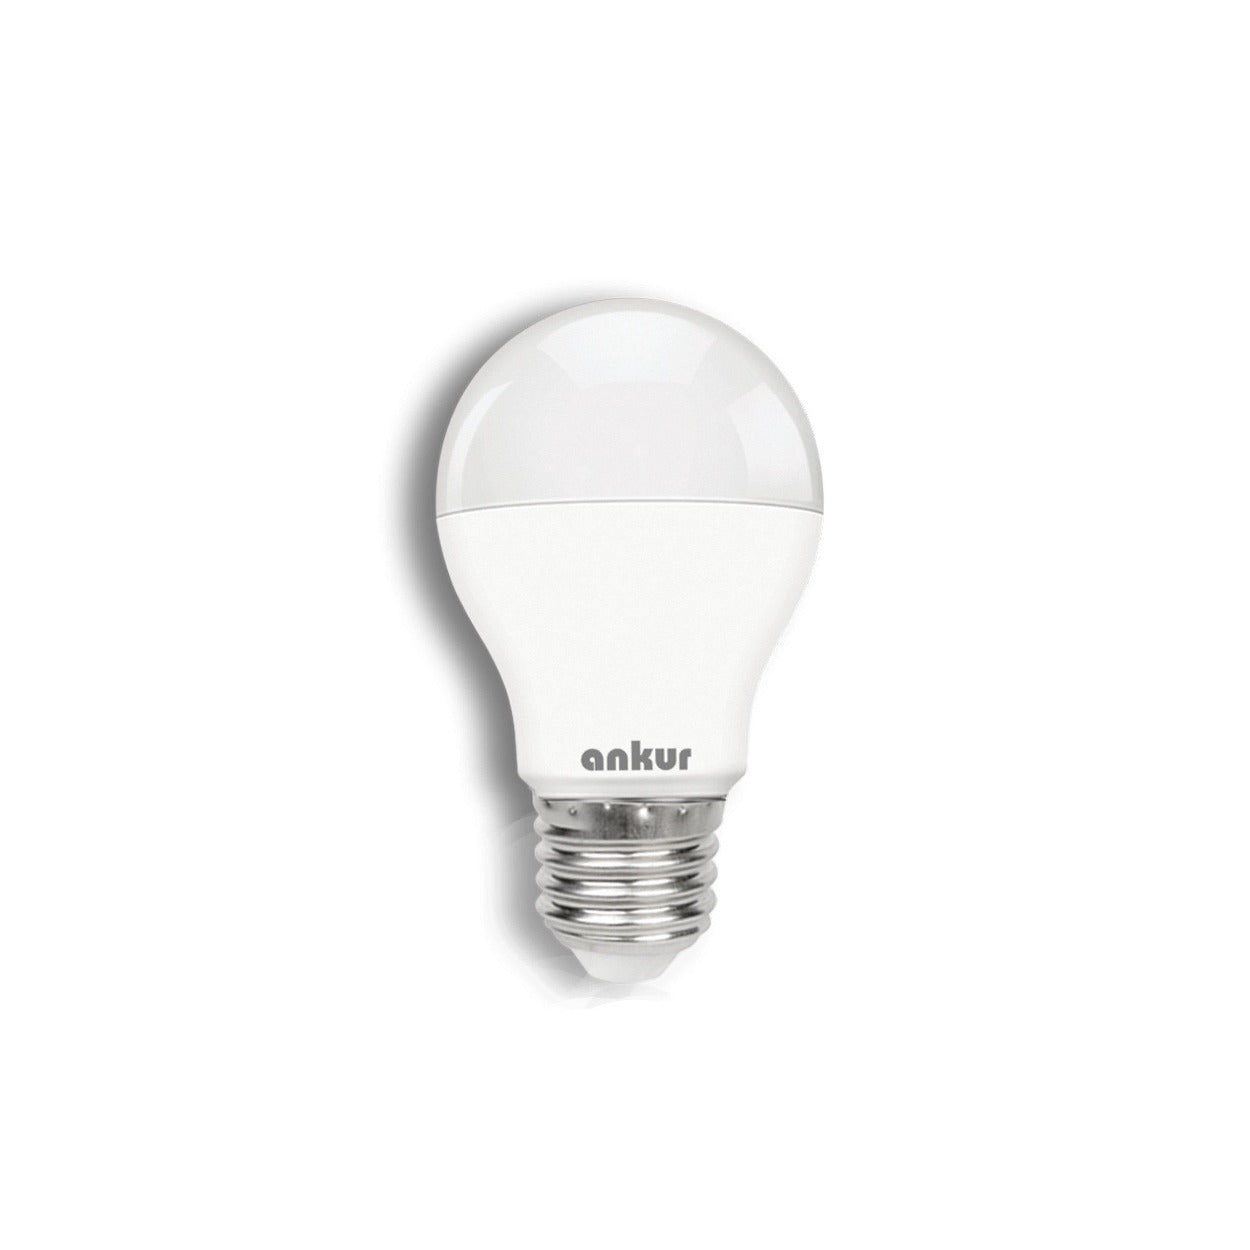 ANKUR GLO FROSTED LED LAMP - Ankur Lighting